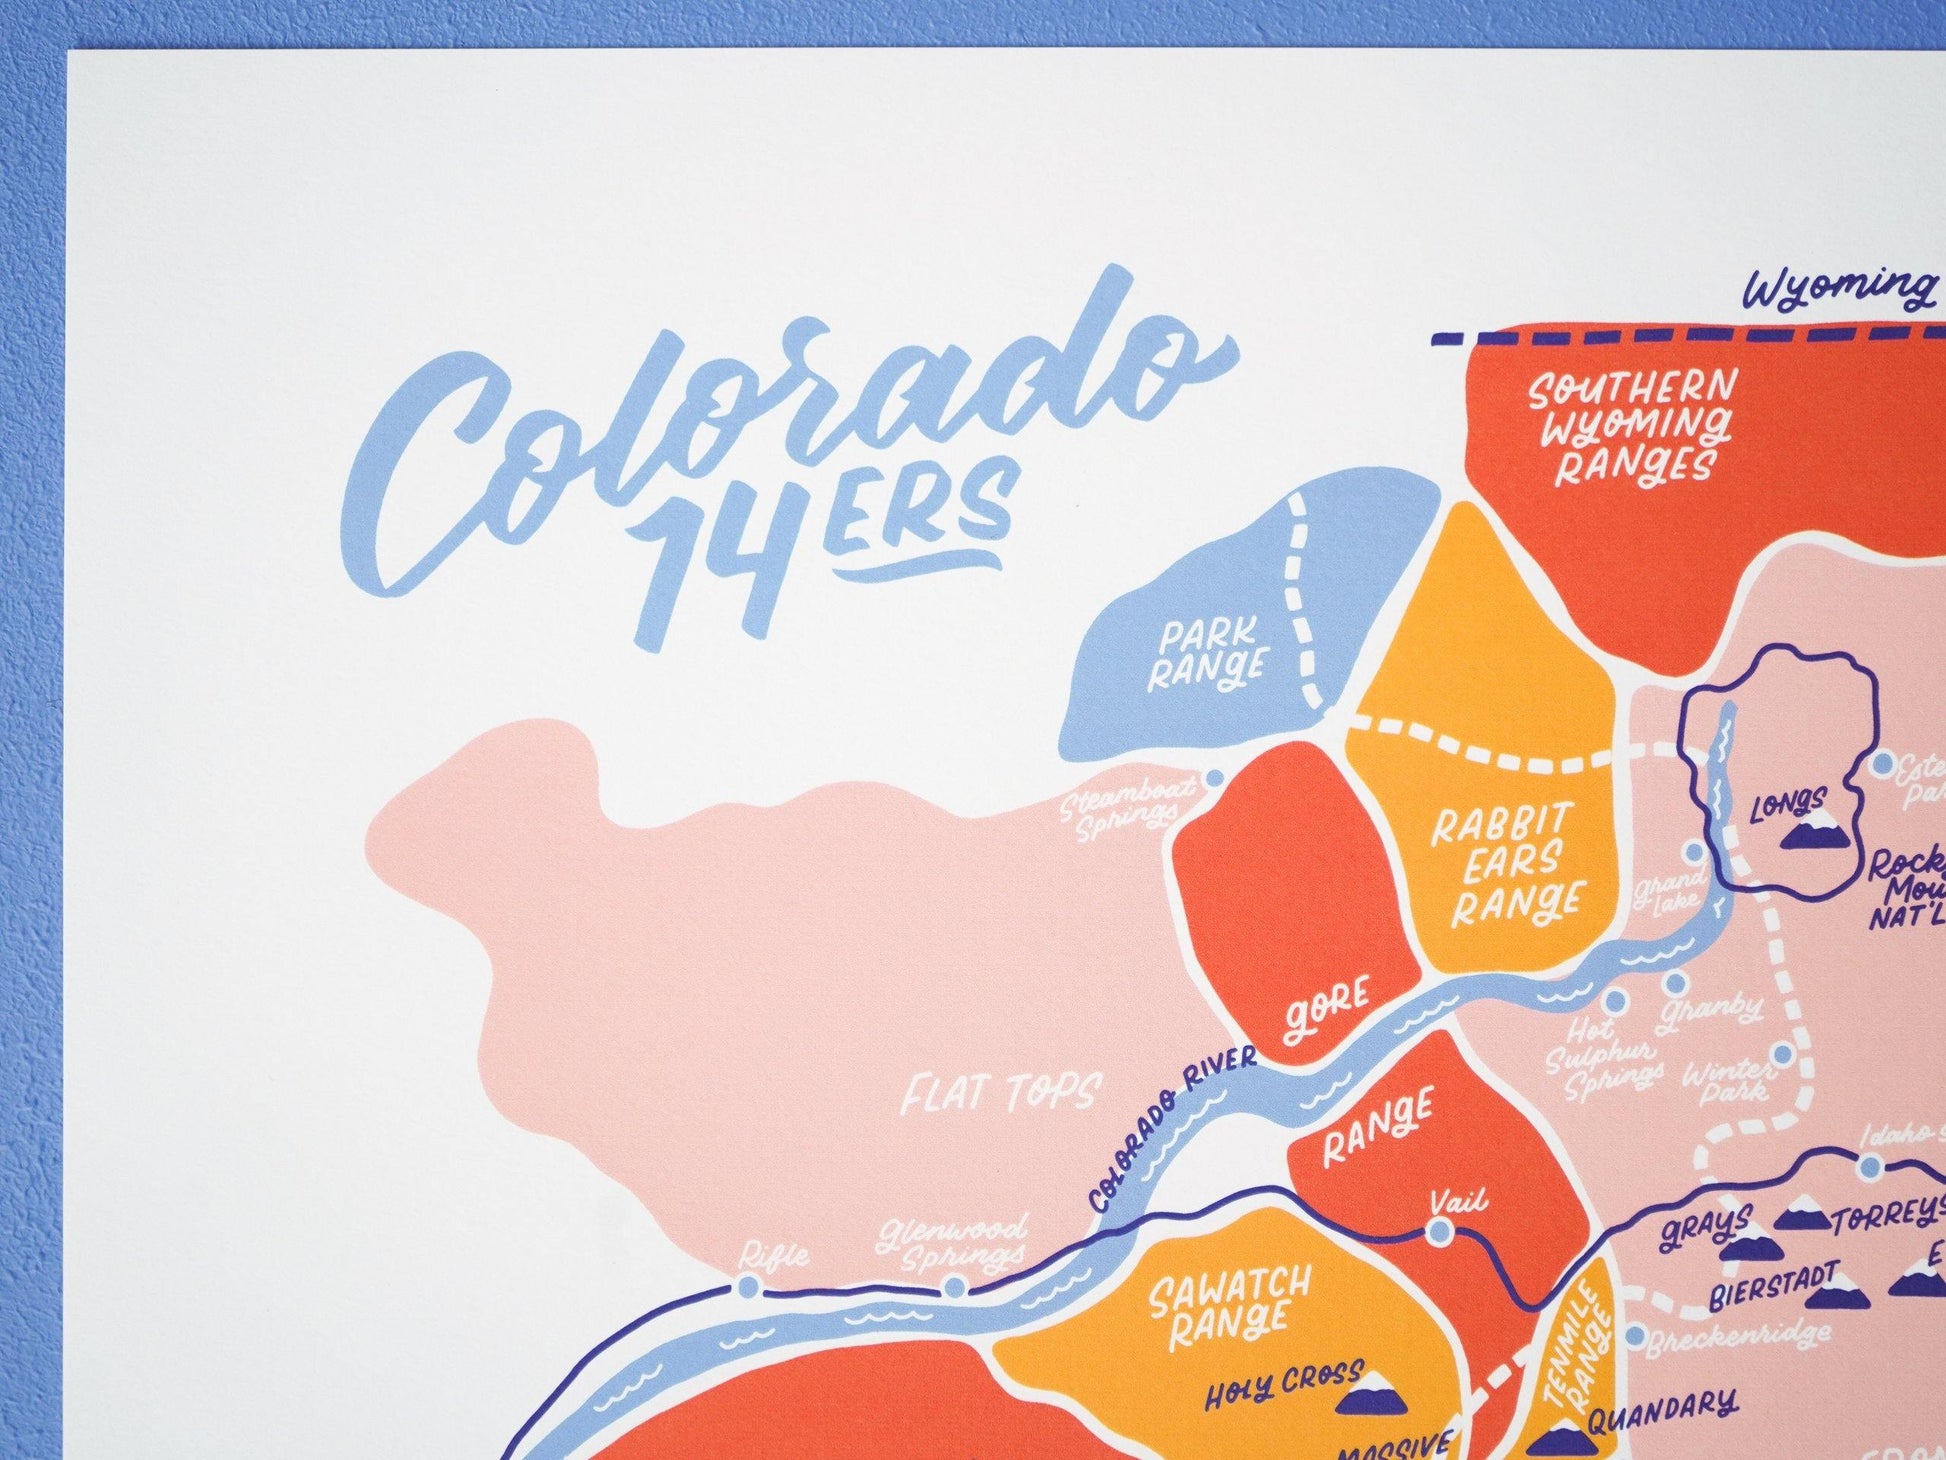 Colorful Colorado 14ers Map. Hiking Colorado Wall Map. Colorado wall art.